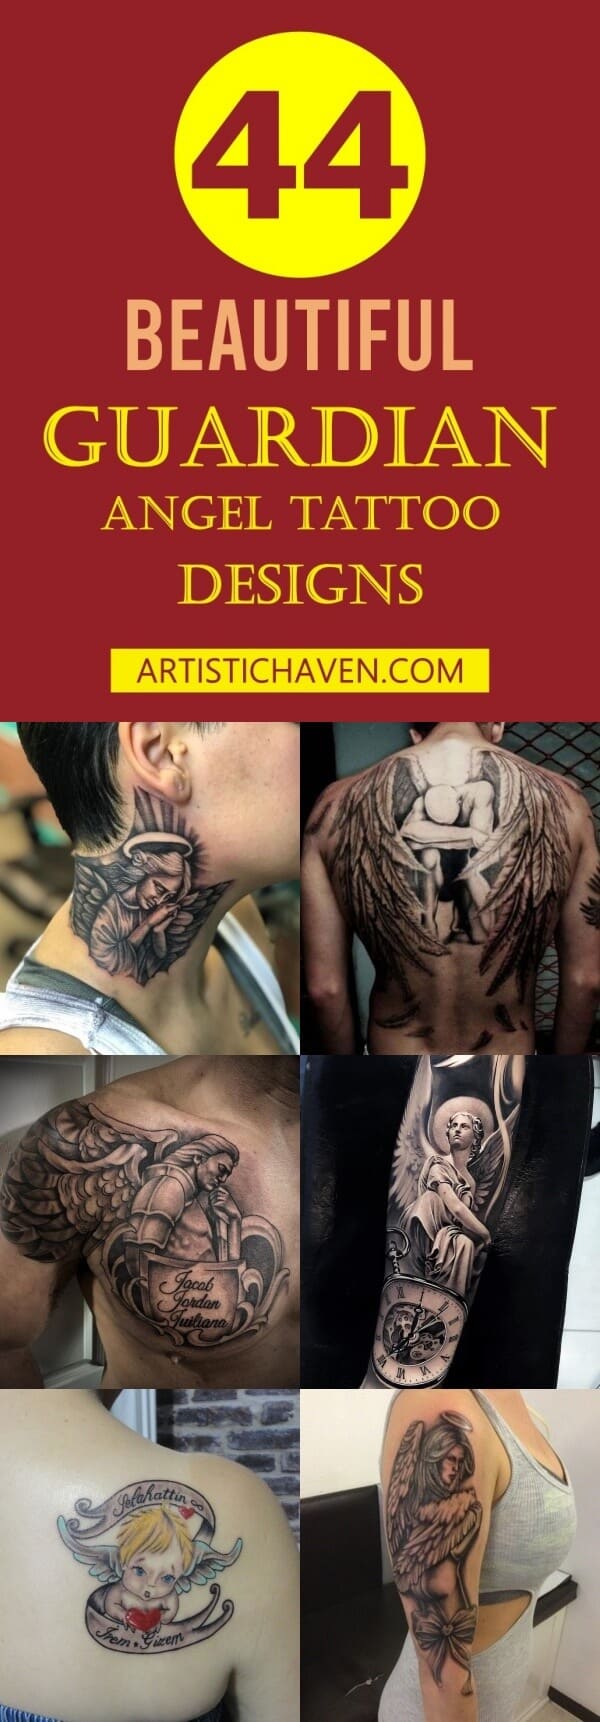 Top 73 Angel Tattoo Ideas 2021 Inspiration Guide